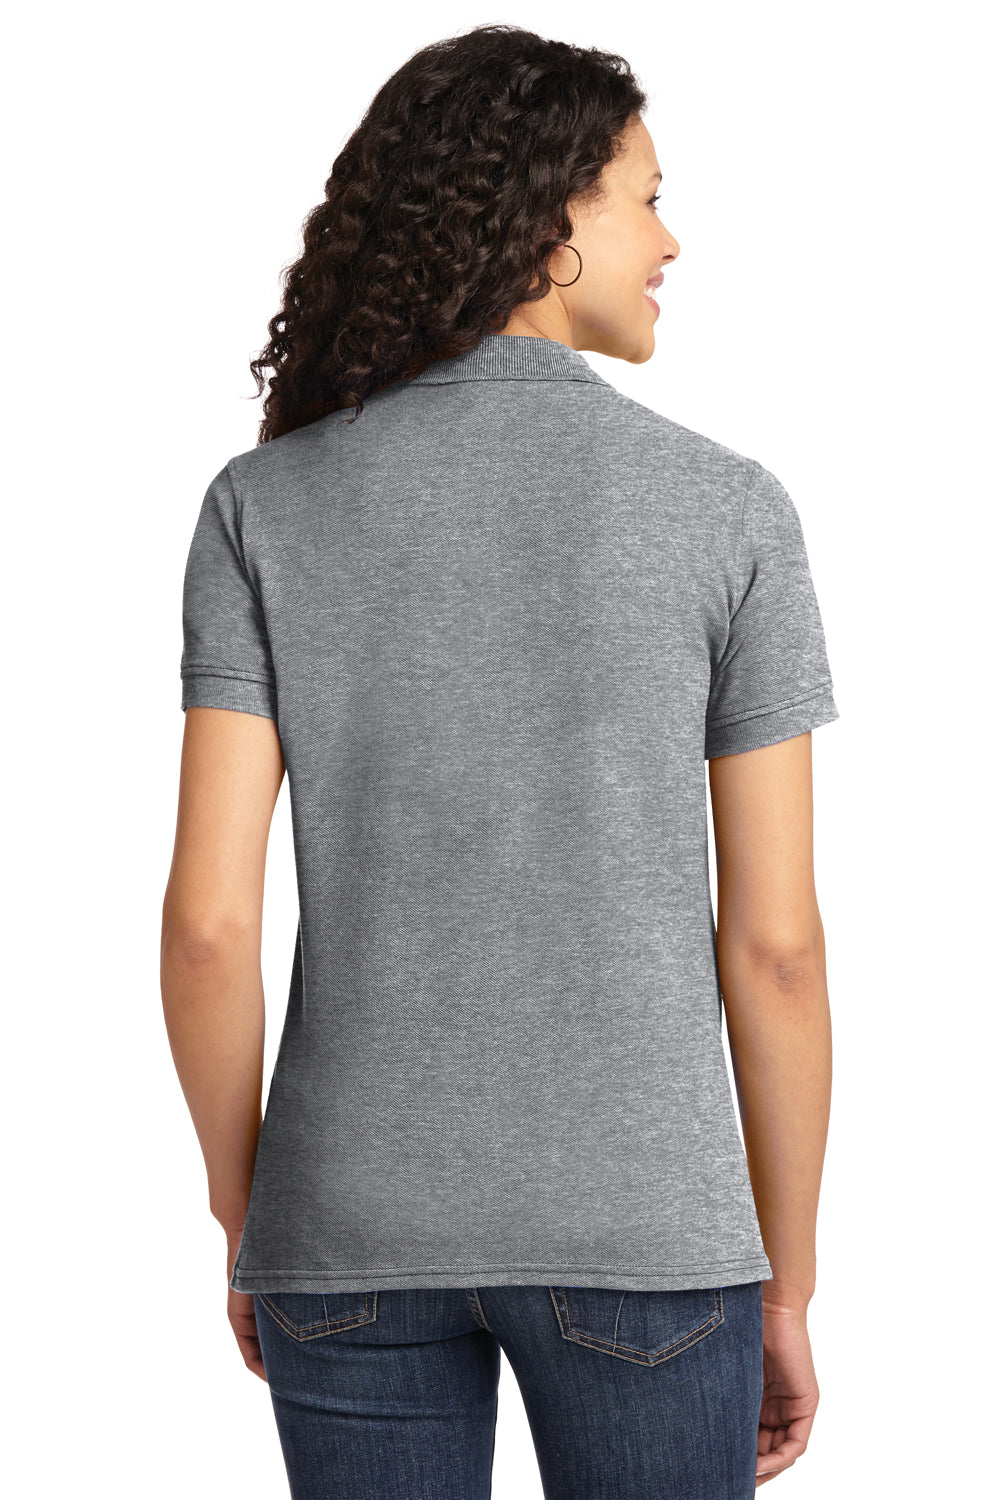 Port & Company LKP155 Womens Core Stain Resistant Short Sleeve Polo Shirt Heather Grey Back